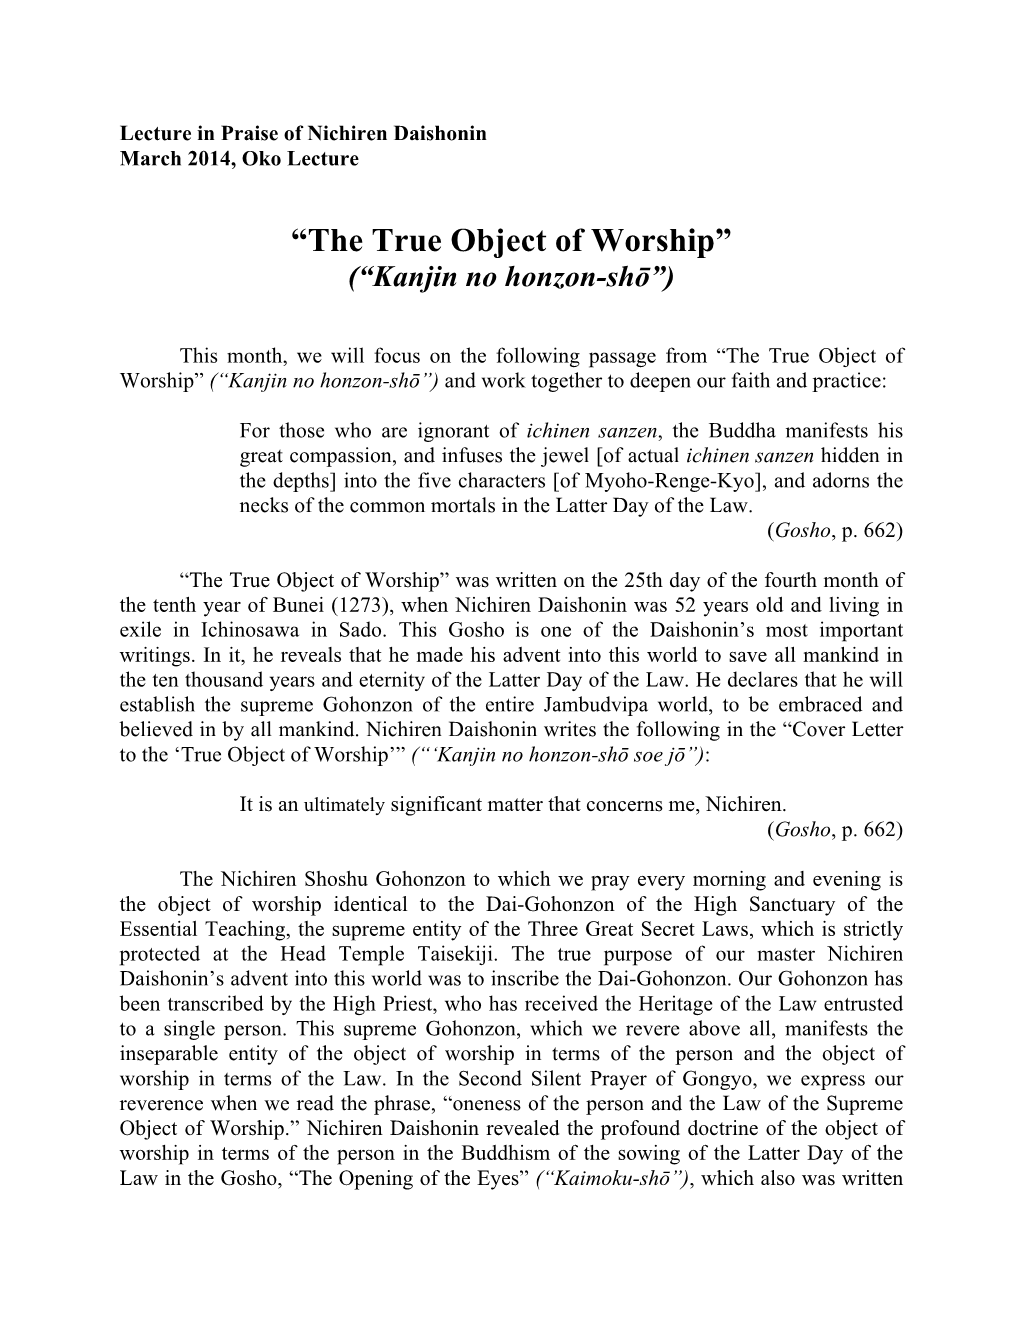 “The True Object of Worship” (“Kanjin No Honzon-Shō”)